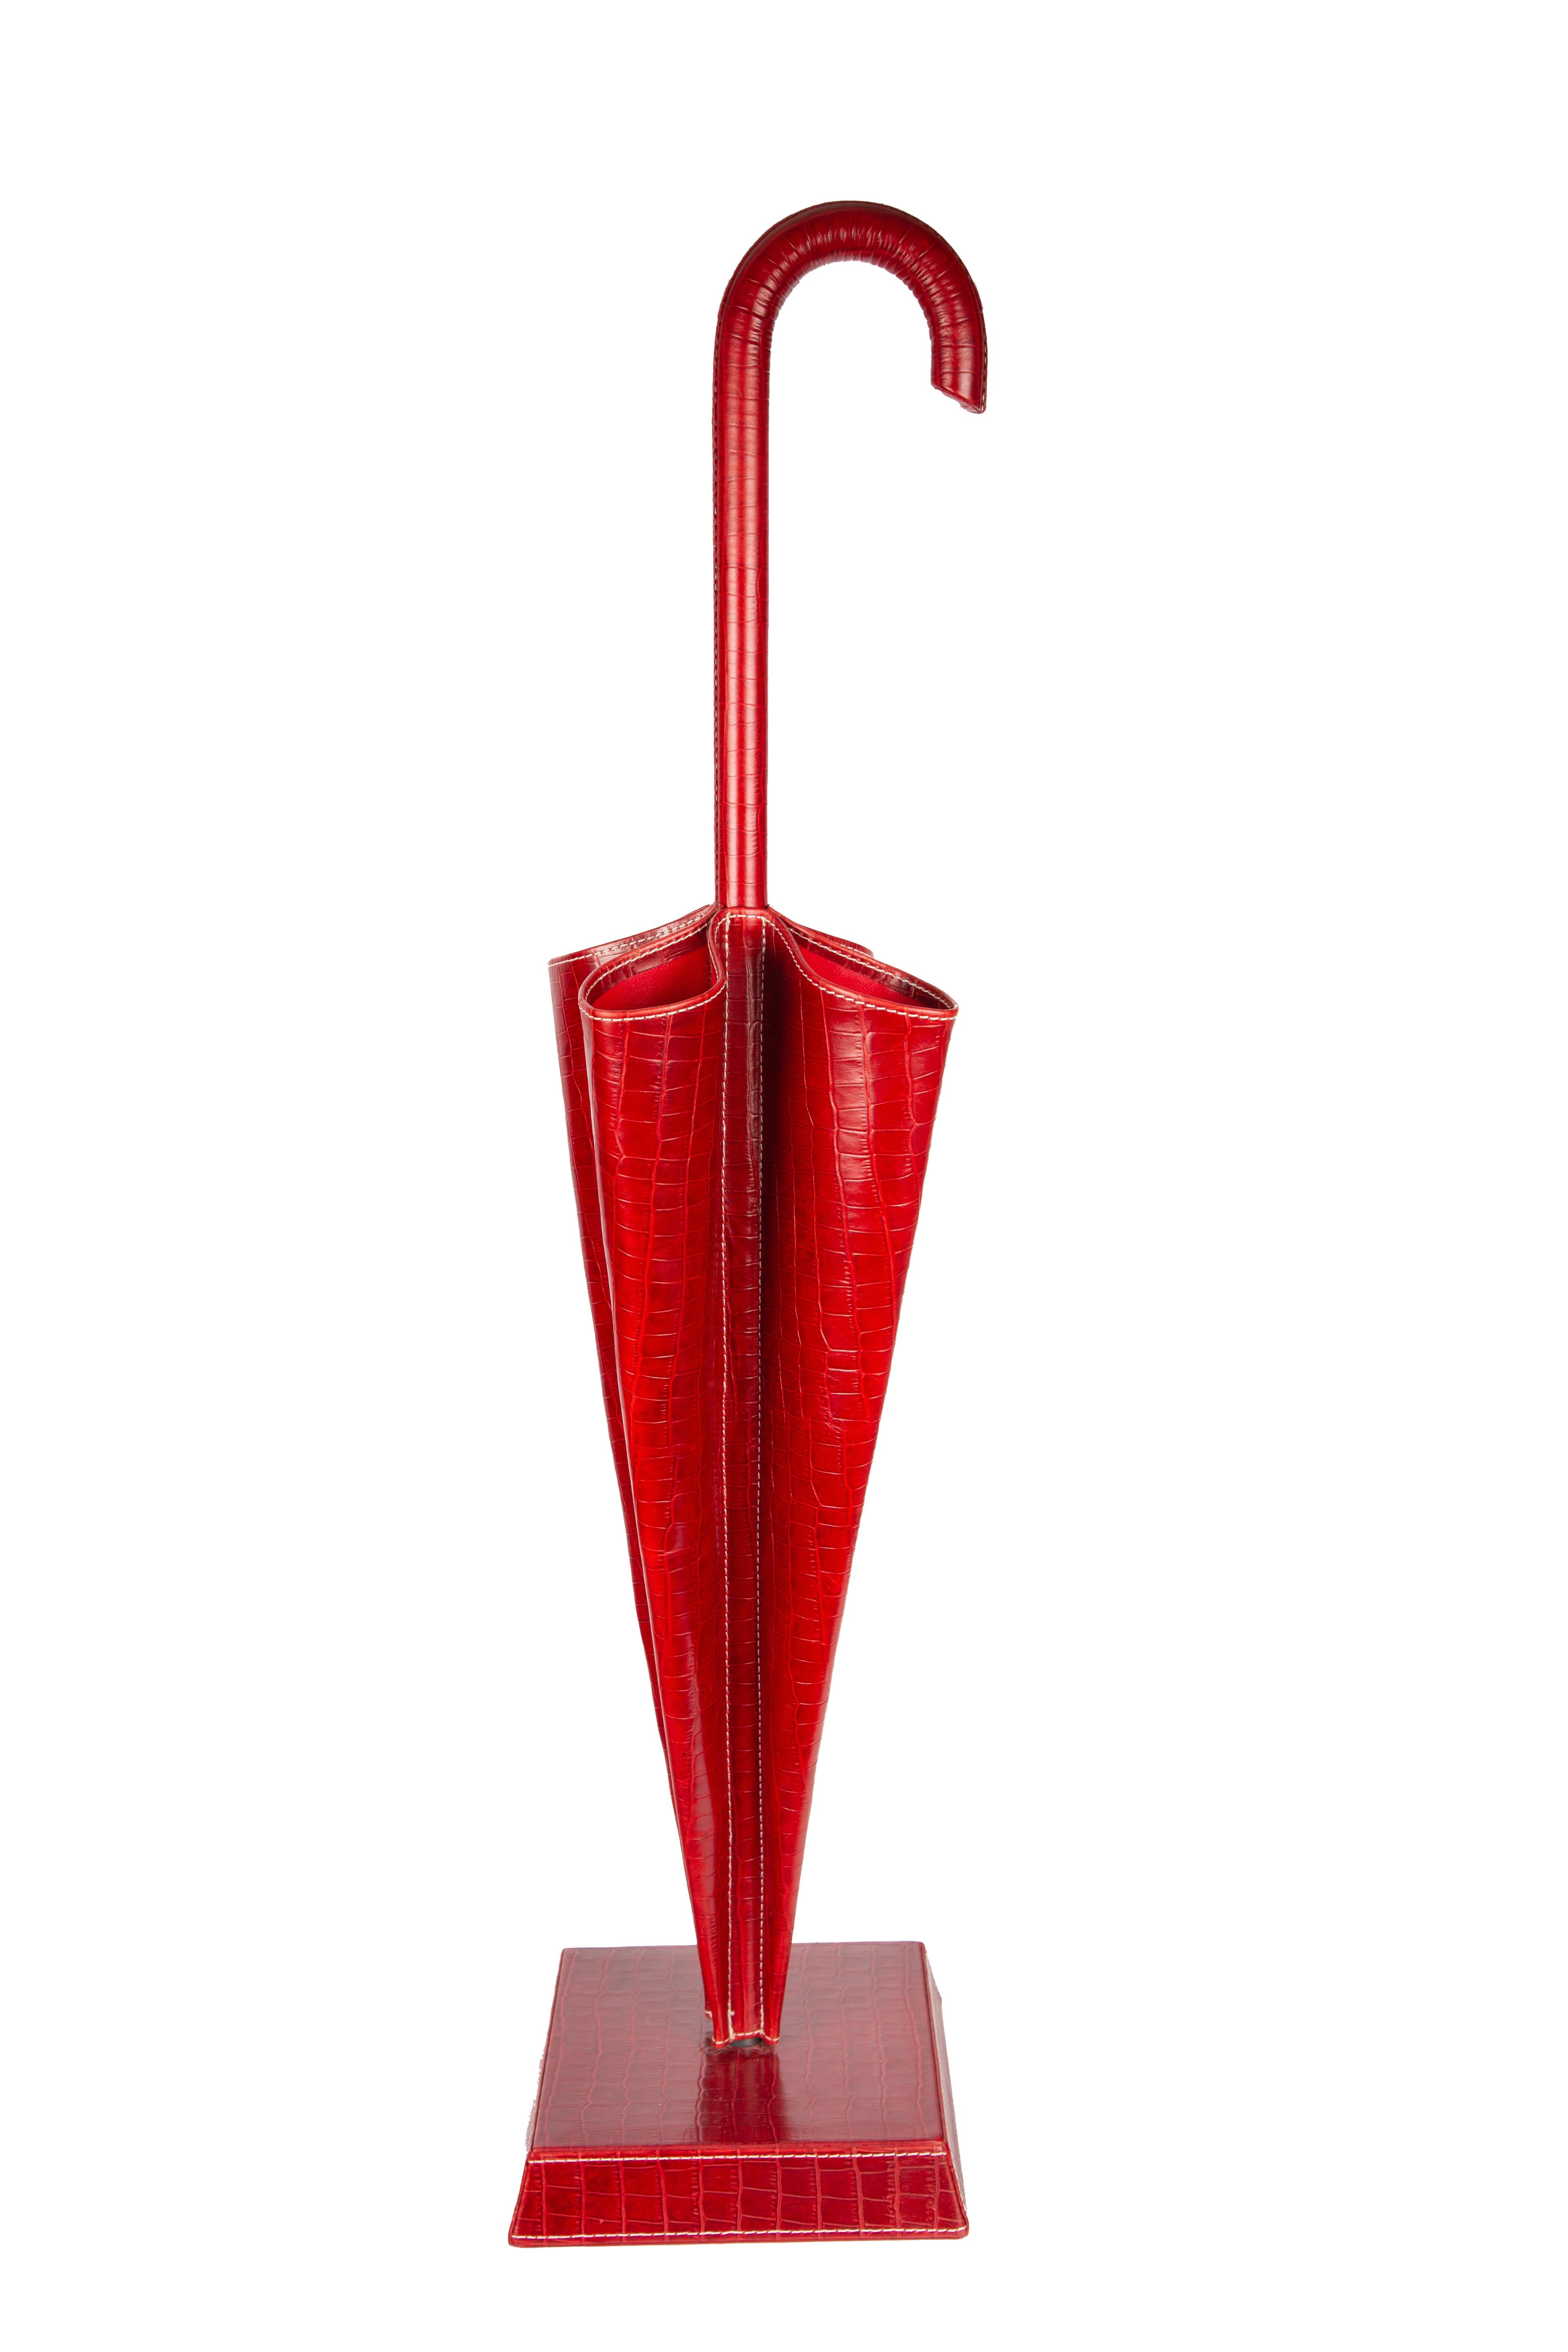 Vig Bergdorf Goodman Schirmständer aus geprägtem Croc-Leder:

Maße: 8